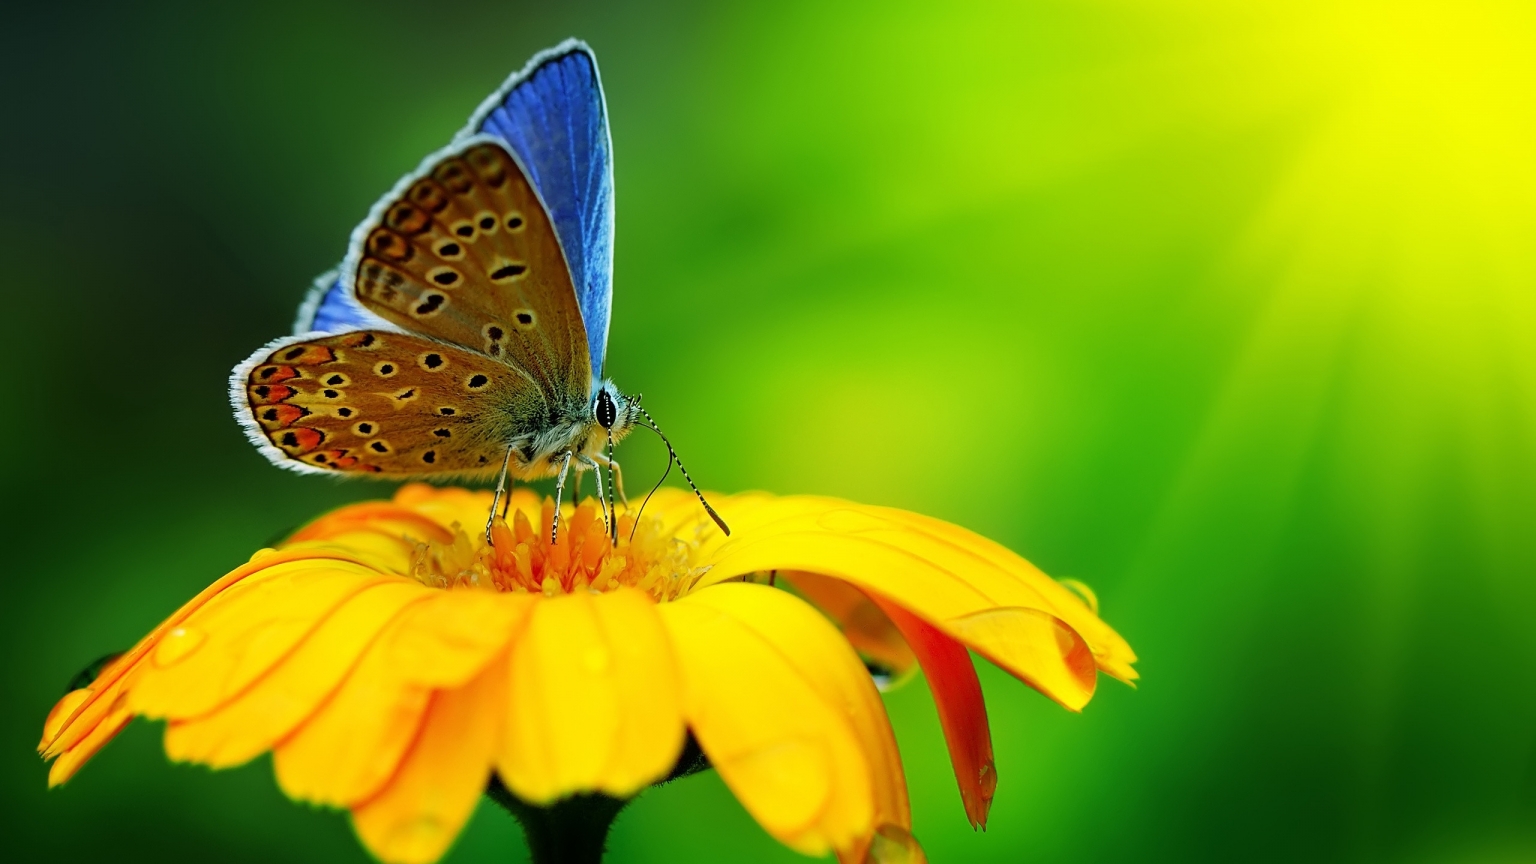 Butterfly Pollen for 1536 x 864 HDTV resolution